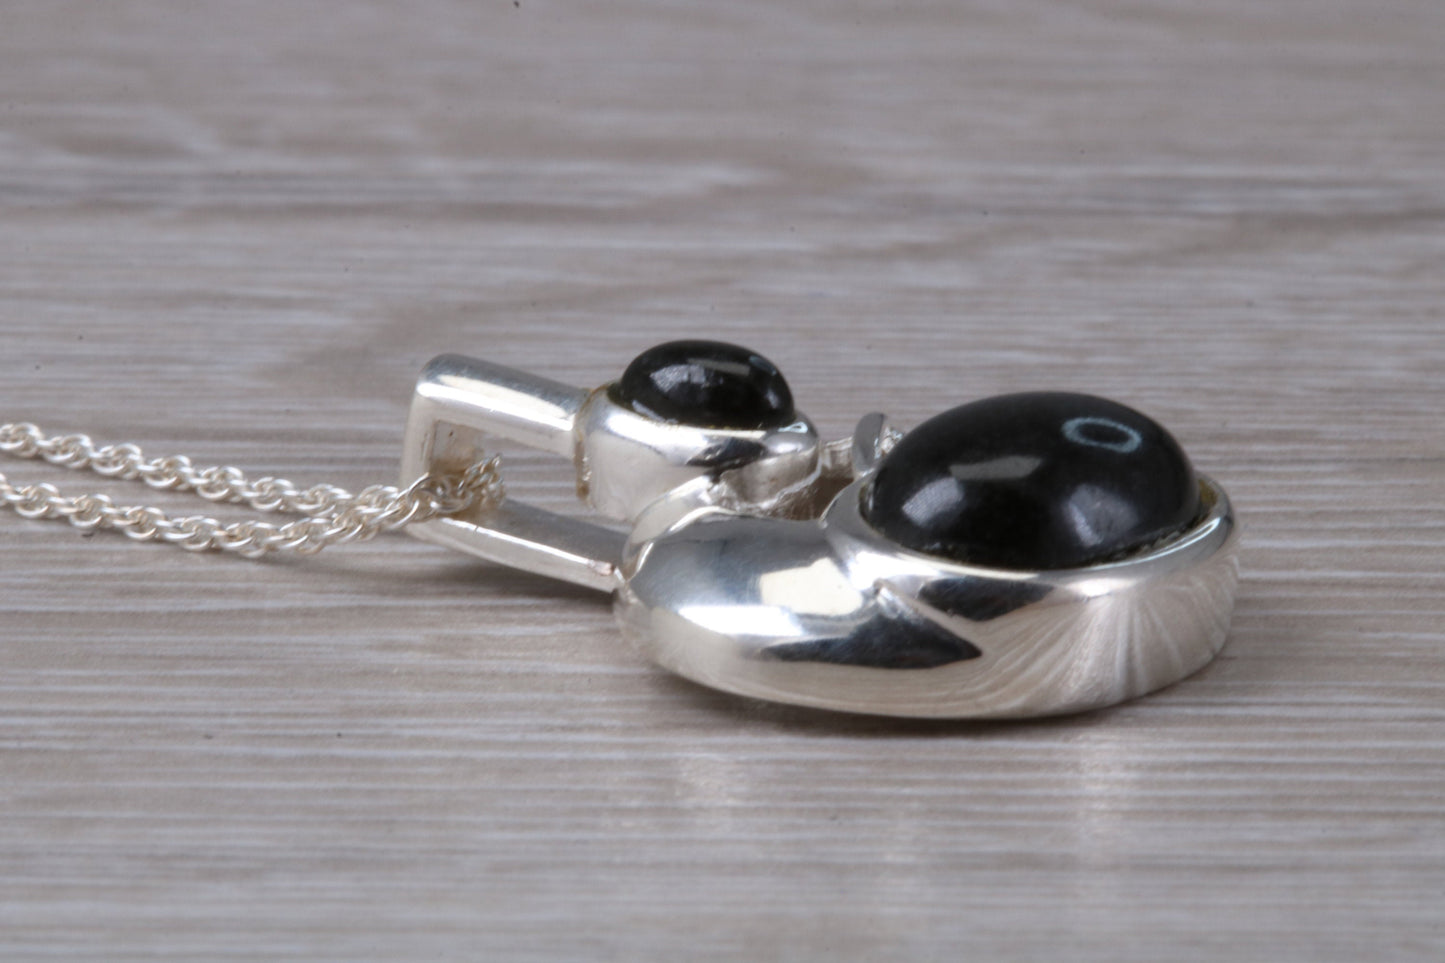 Real Black Jade Necklace set in Sterling Silver